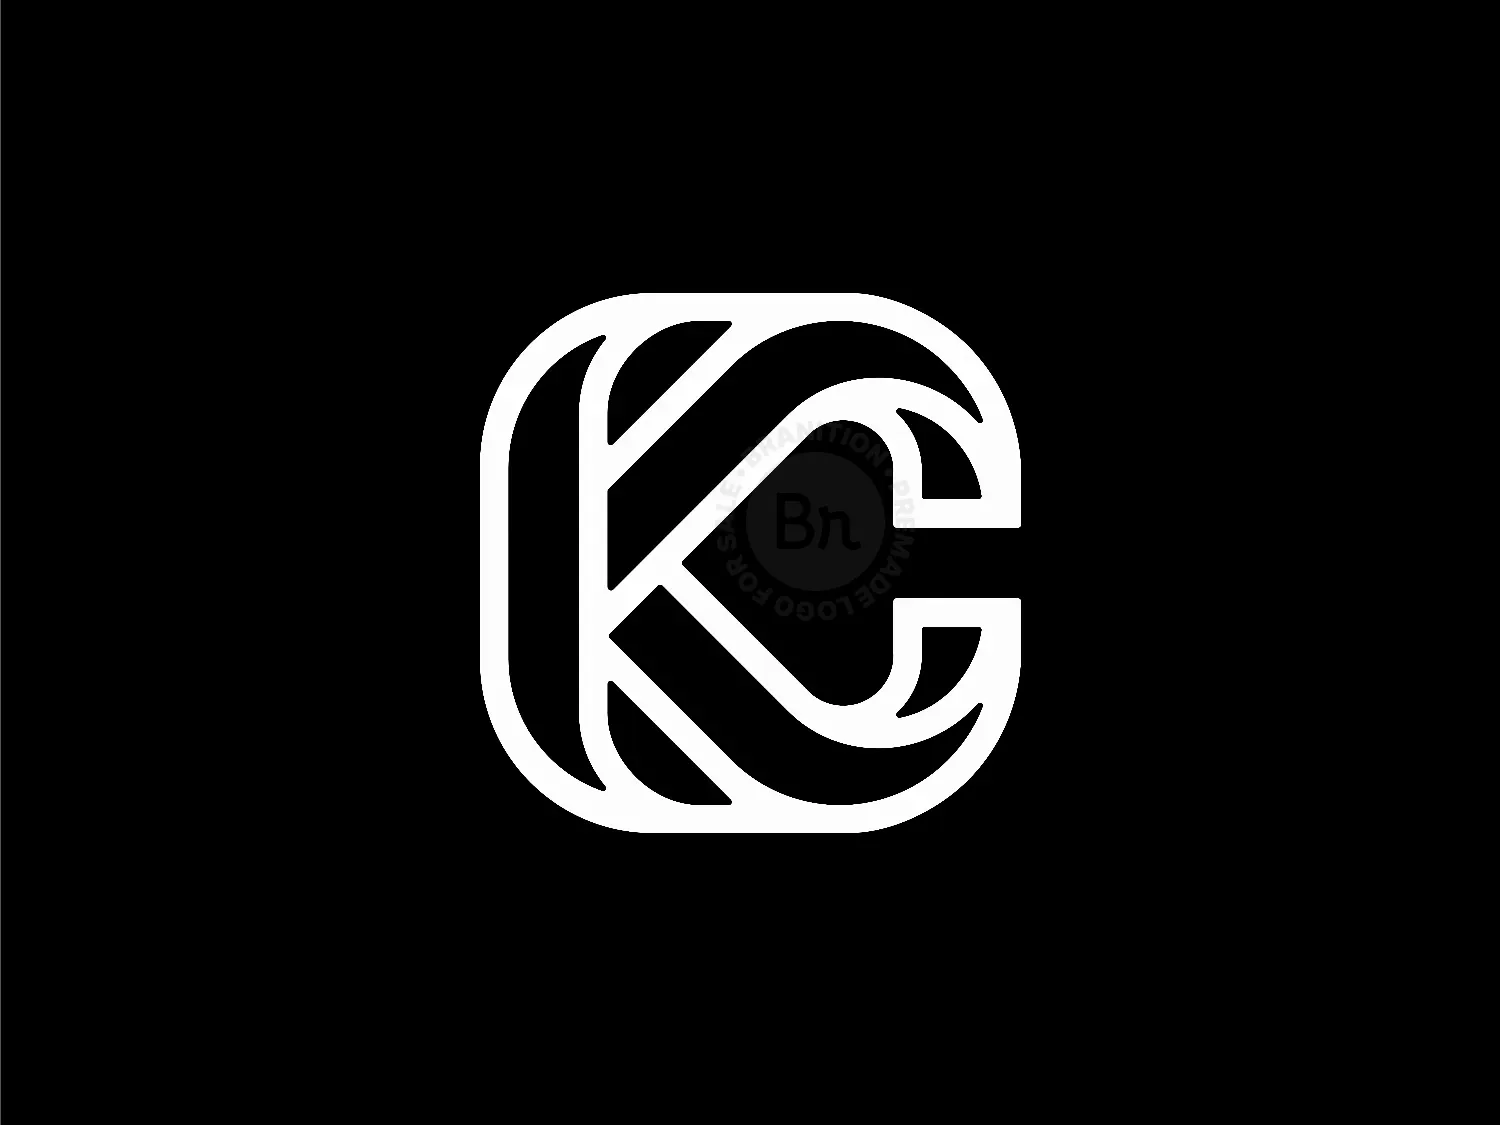 Kc letter logo Free Stock Vectors